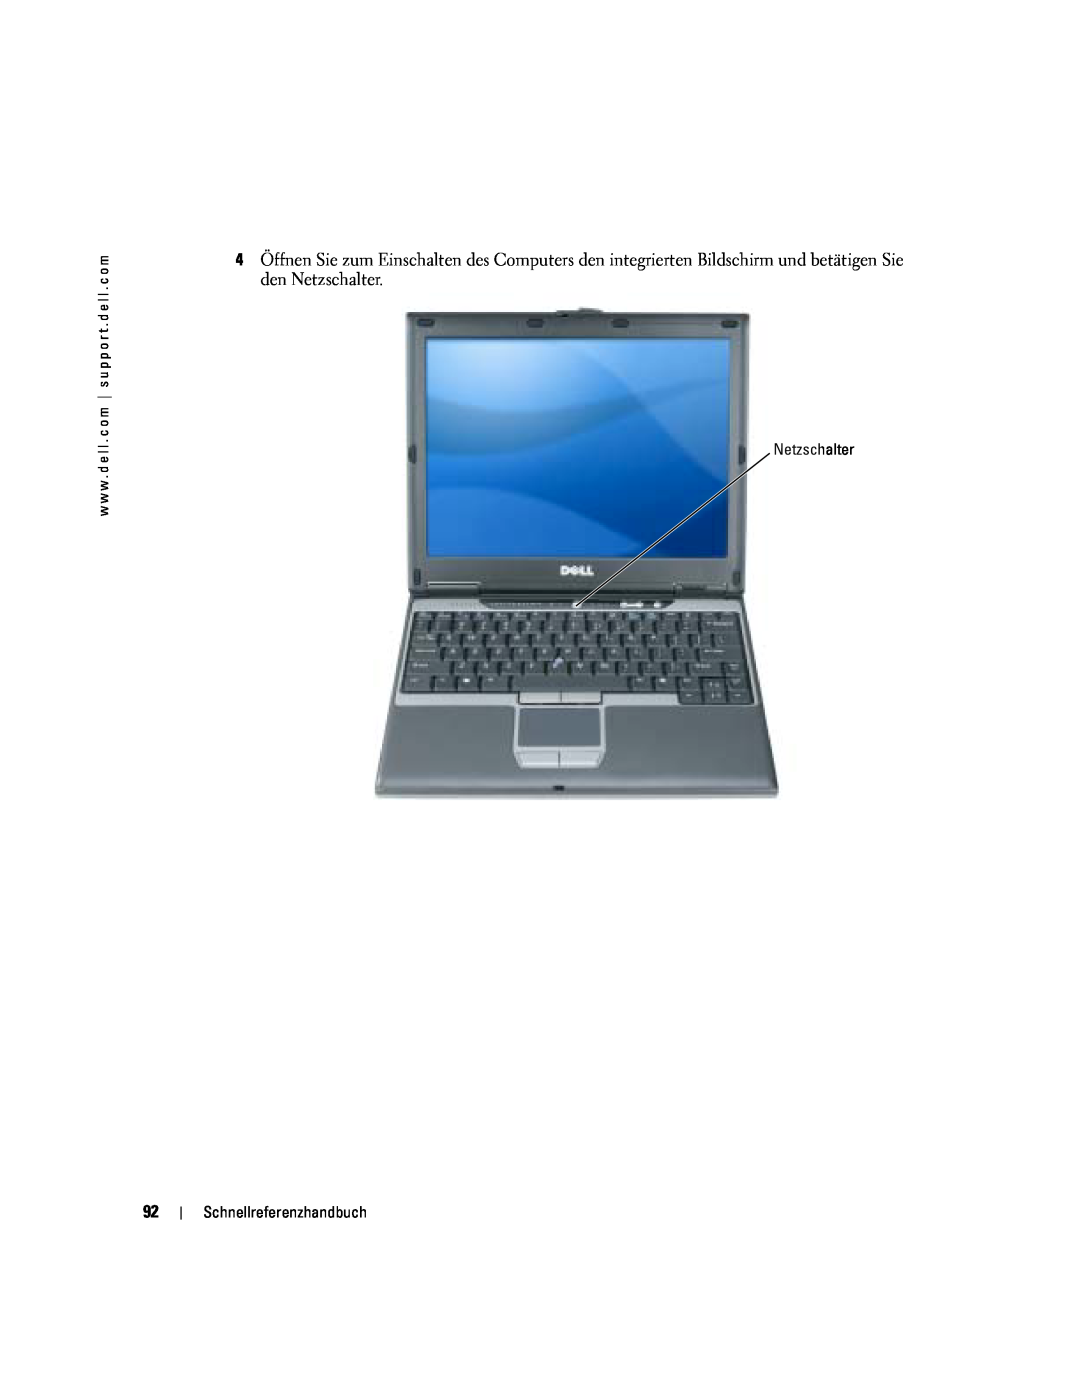 Dell PP06S manual Netzschalter, Schnellreferenzhandbuch 